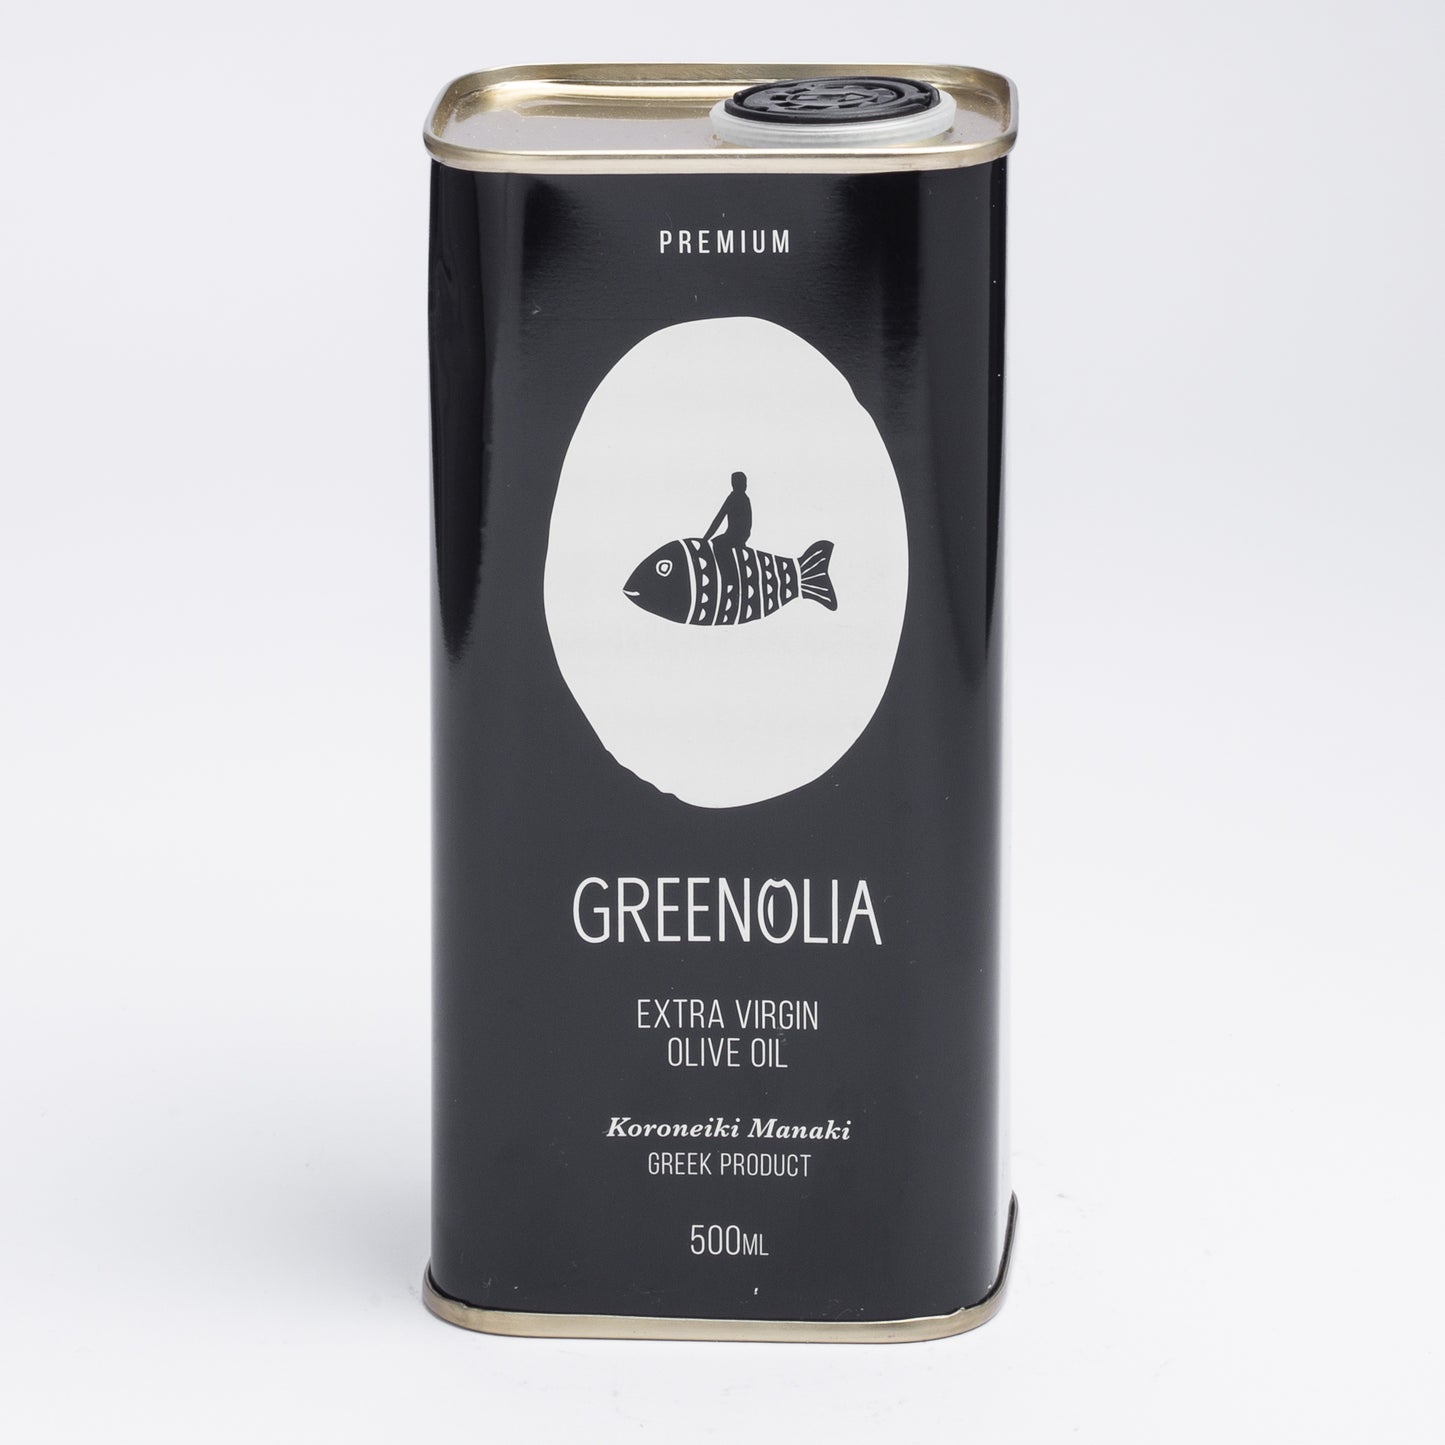 Greenolia Premium Extra Virgin Olive Oil Tin 500ml